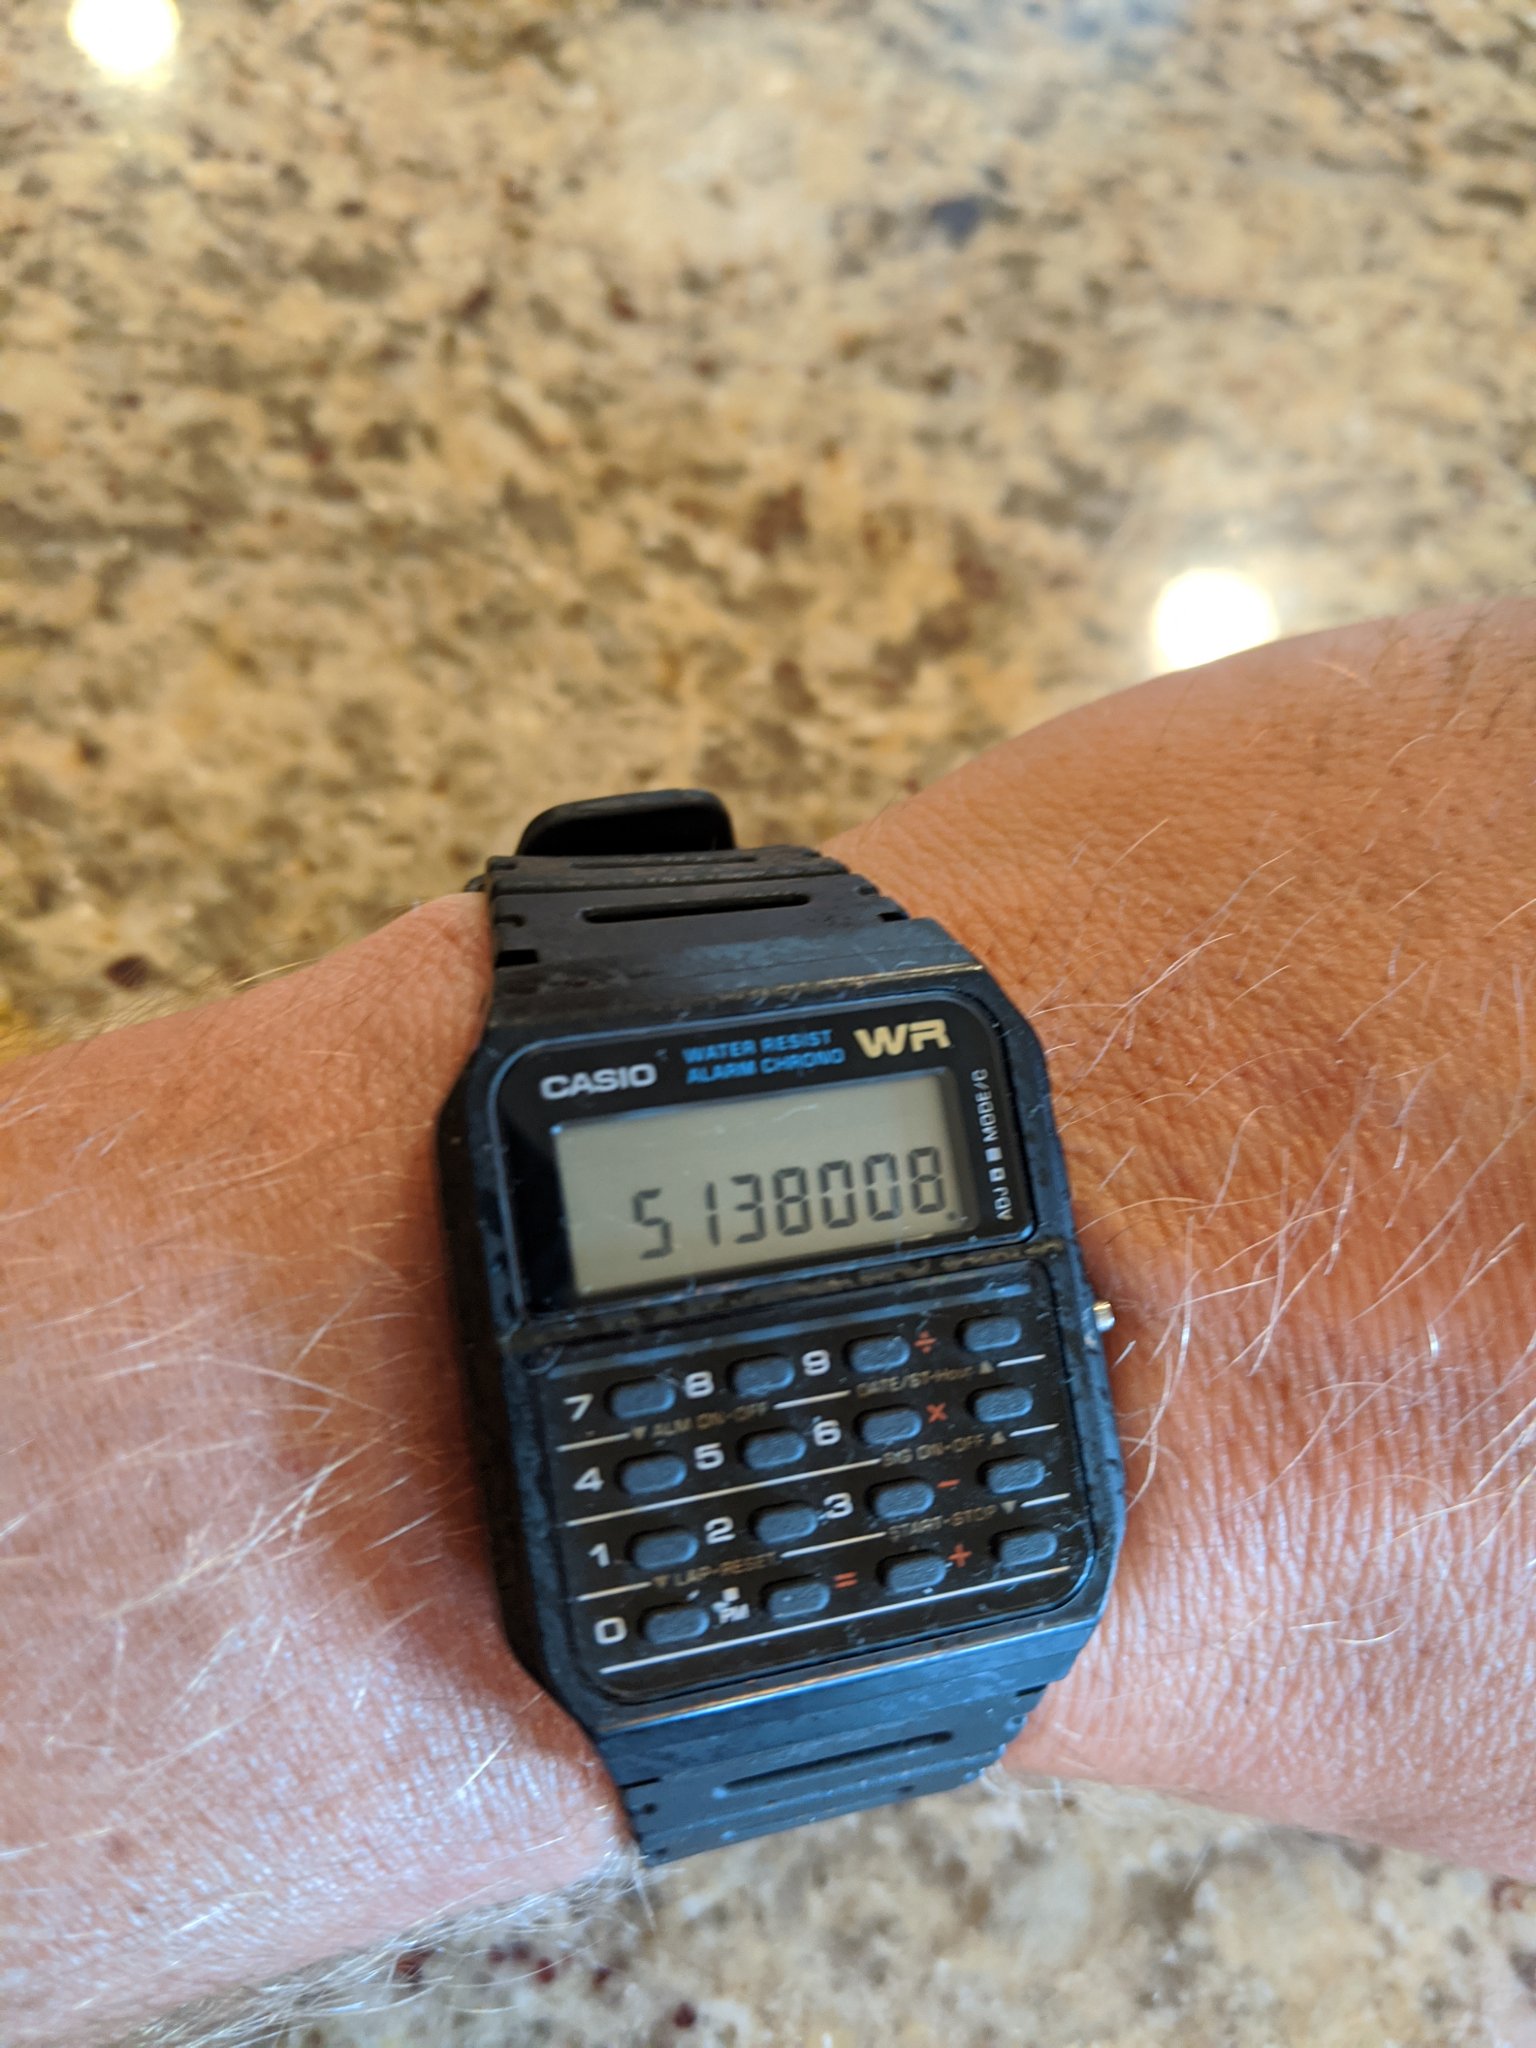 Calculator Watch.jpg